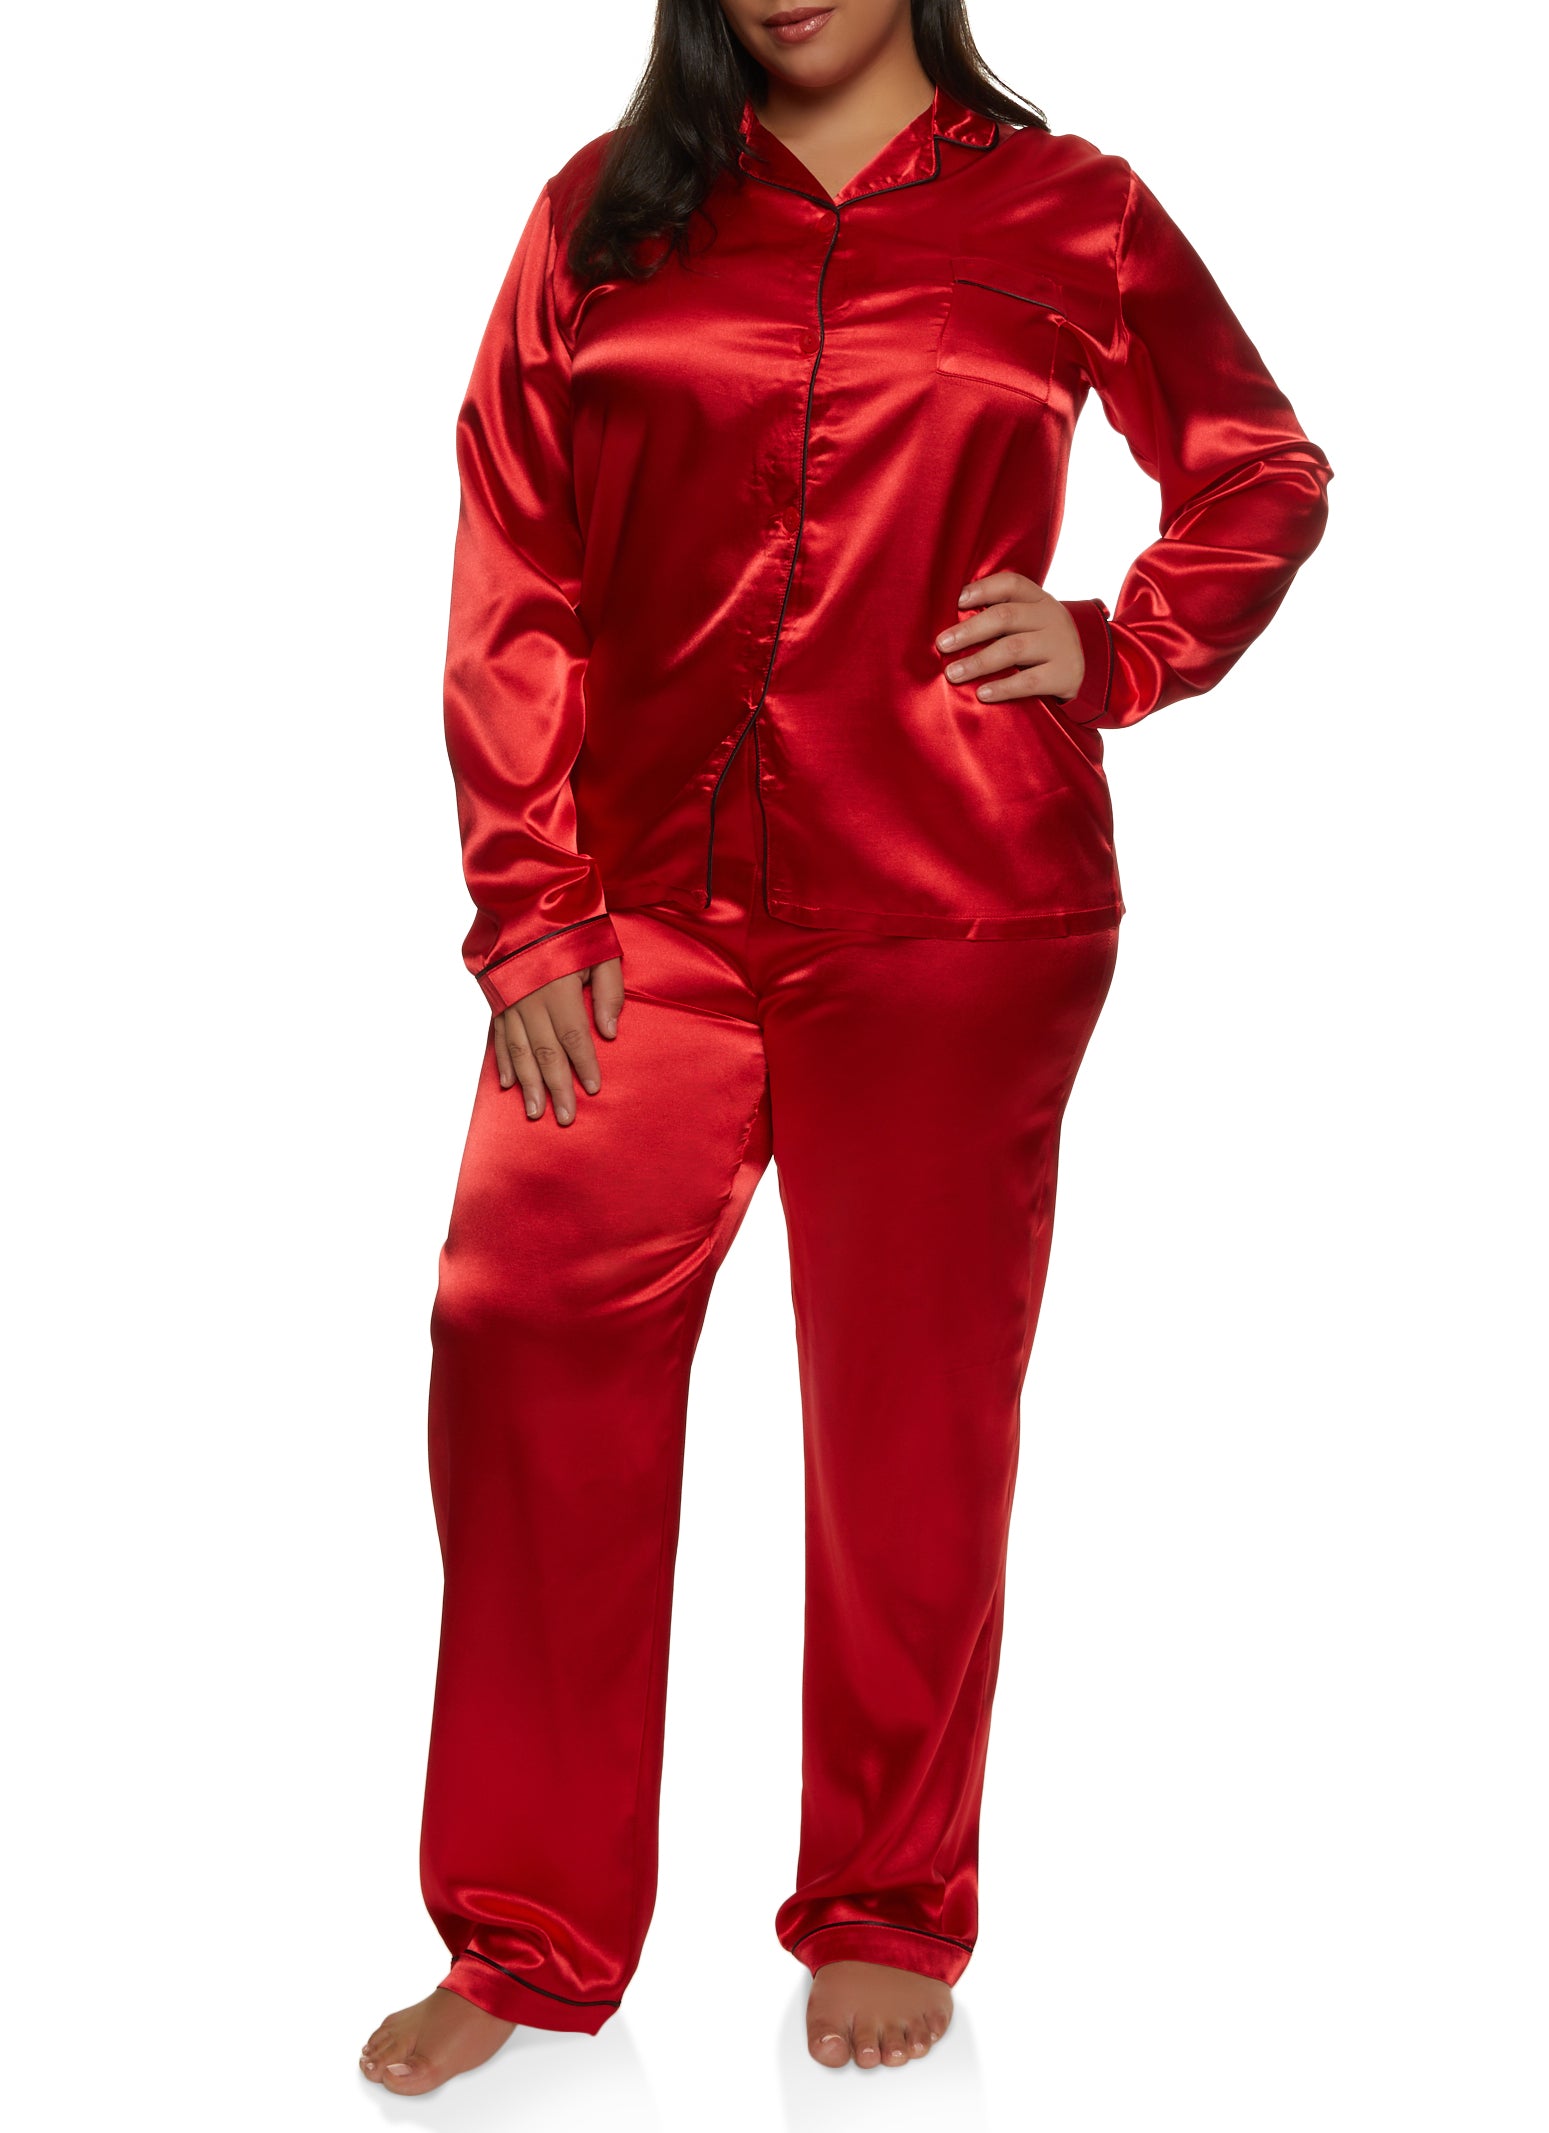 Rainbow Shops Womens Plus Size Satin Contrast Trim Pajama Shirt and Pants  Set, Red, Size 3X